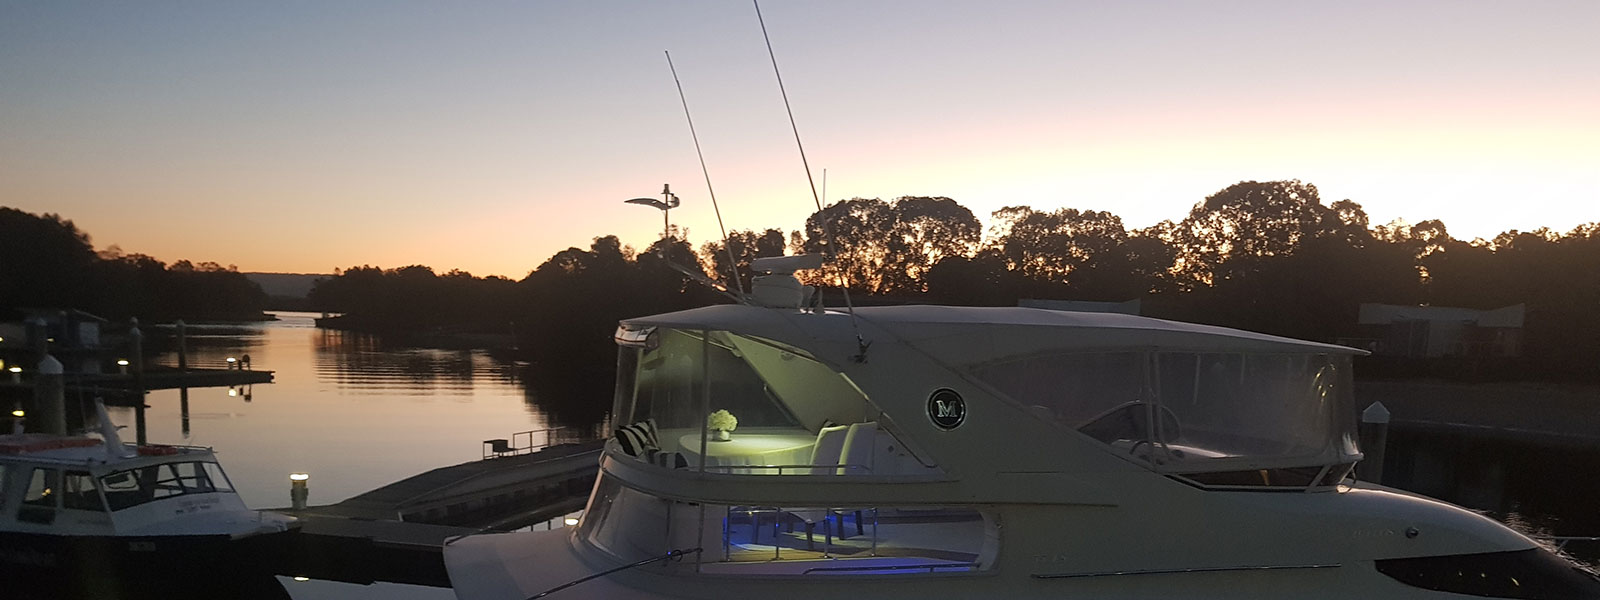 Sky Lounge of Black Diamond motor yacht moored at night